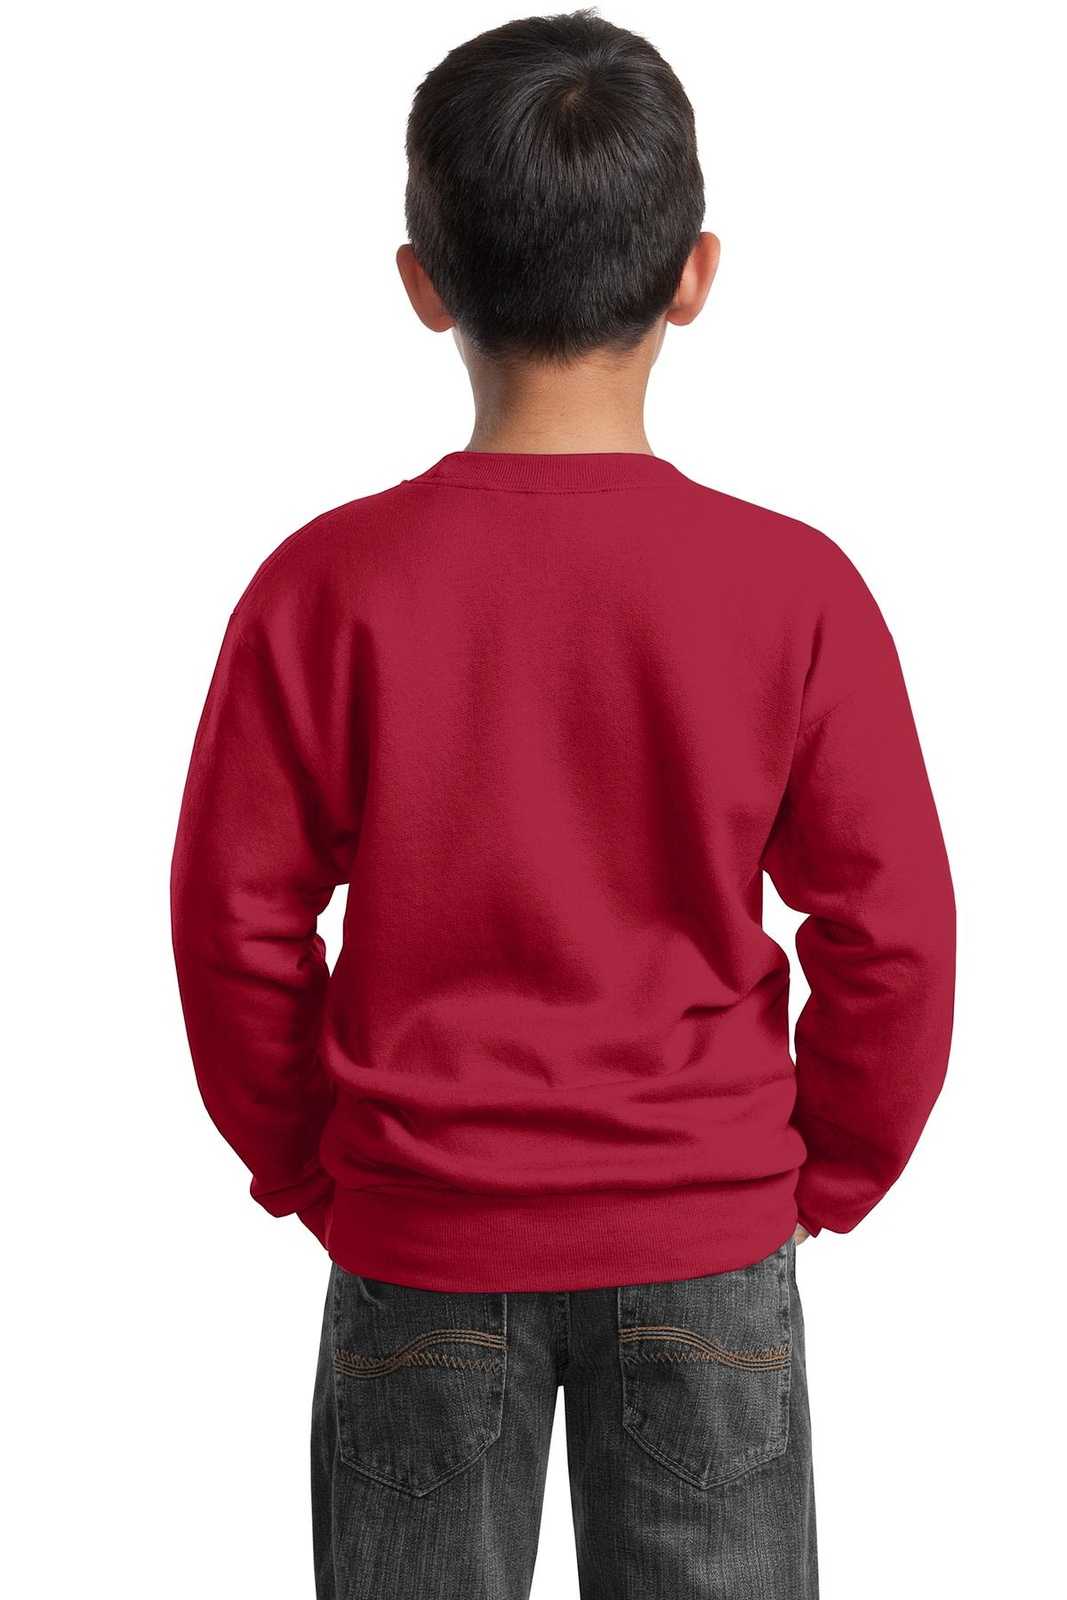 Port &amp; Company PC90Y Youth Core Fleece Crewneck Sweatshirt - Red - HIT a Double - 2